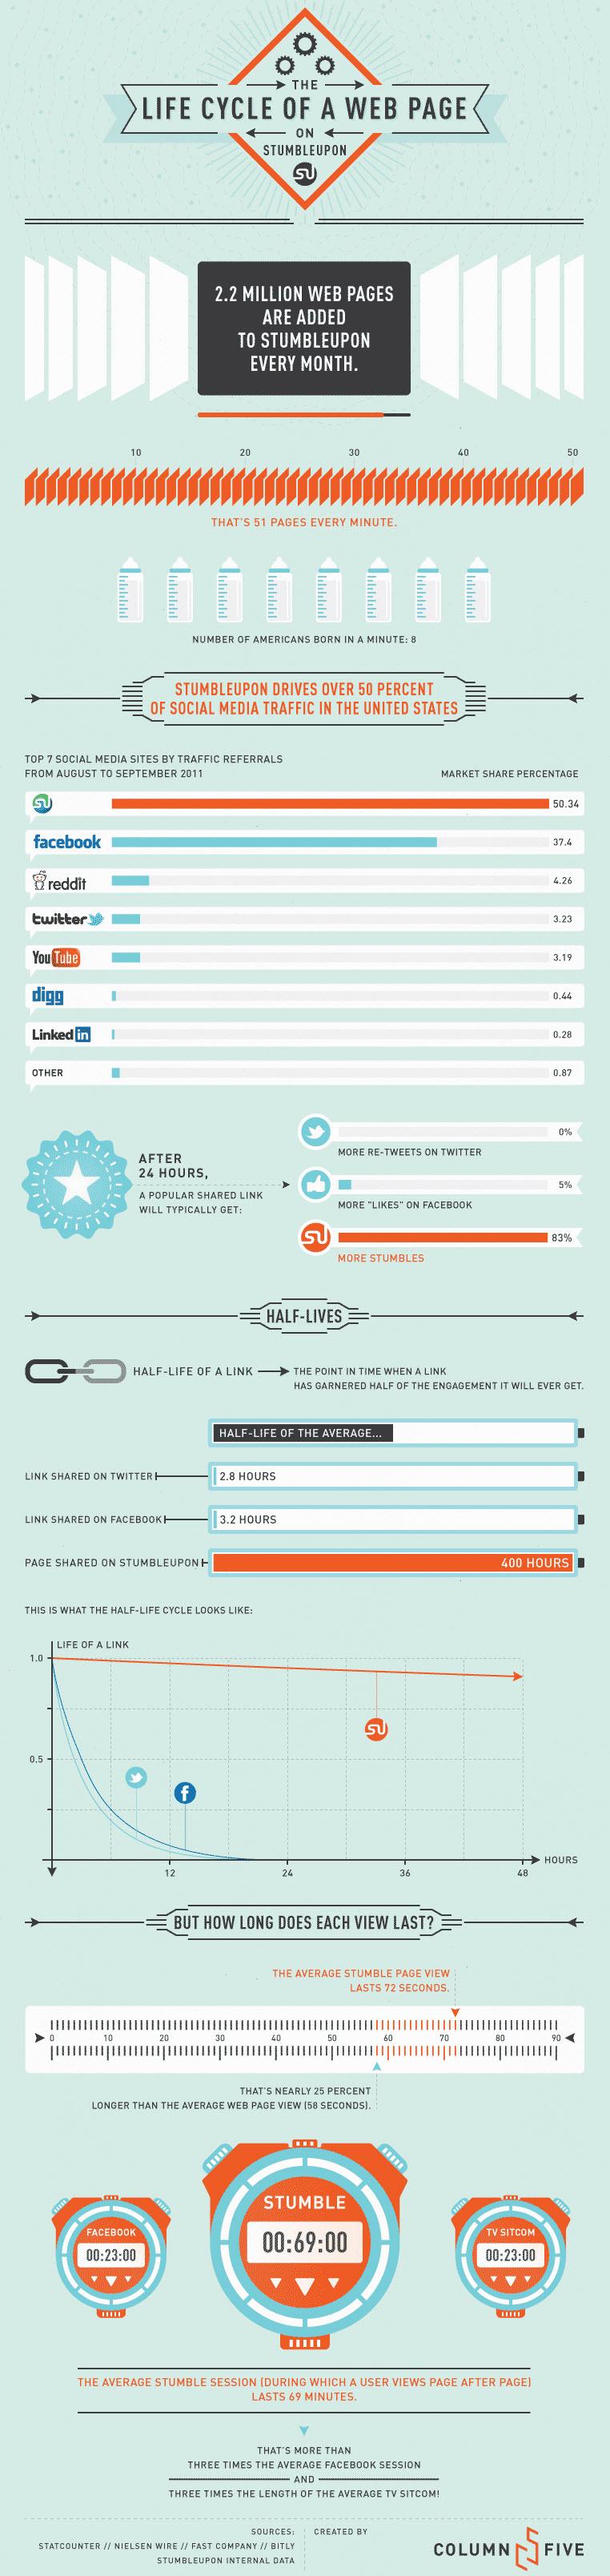 StumbleUpon-Social-Media-Infographic